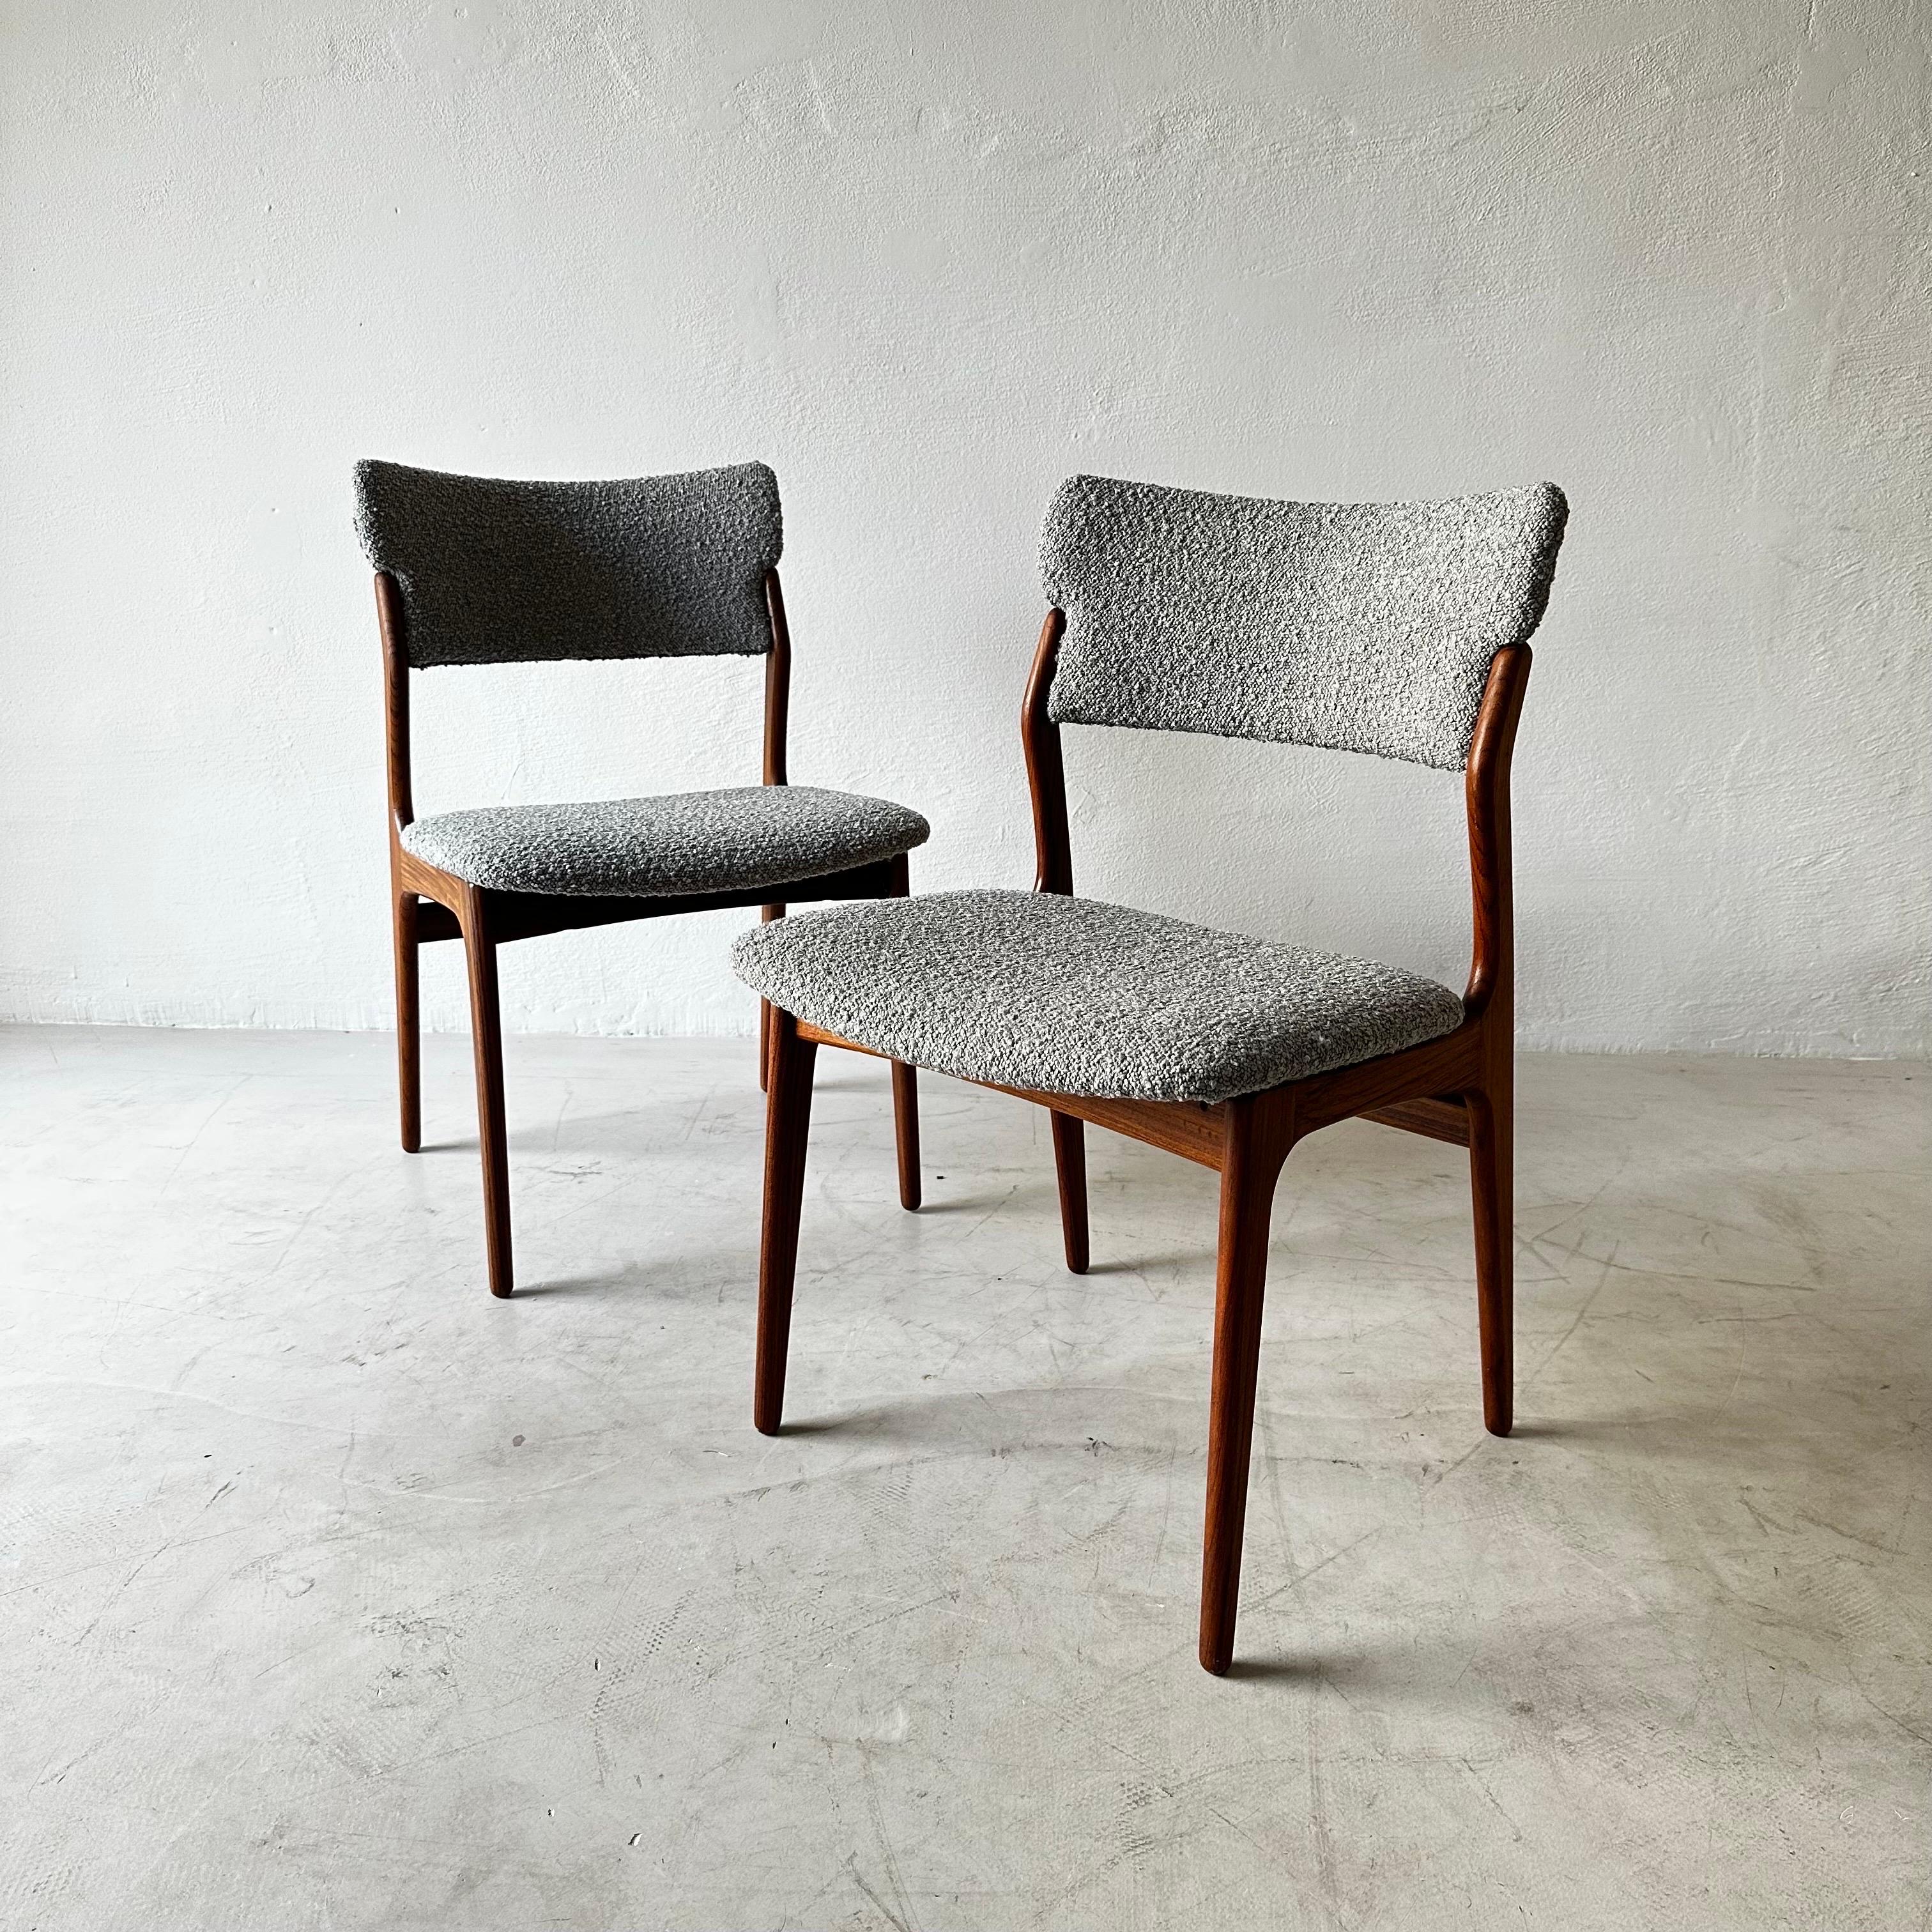 Rare Set of 8 Sculptural Scandinavian Dining Chairs, Denmark, 1960s For Sale 3